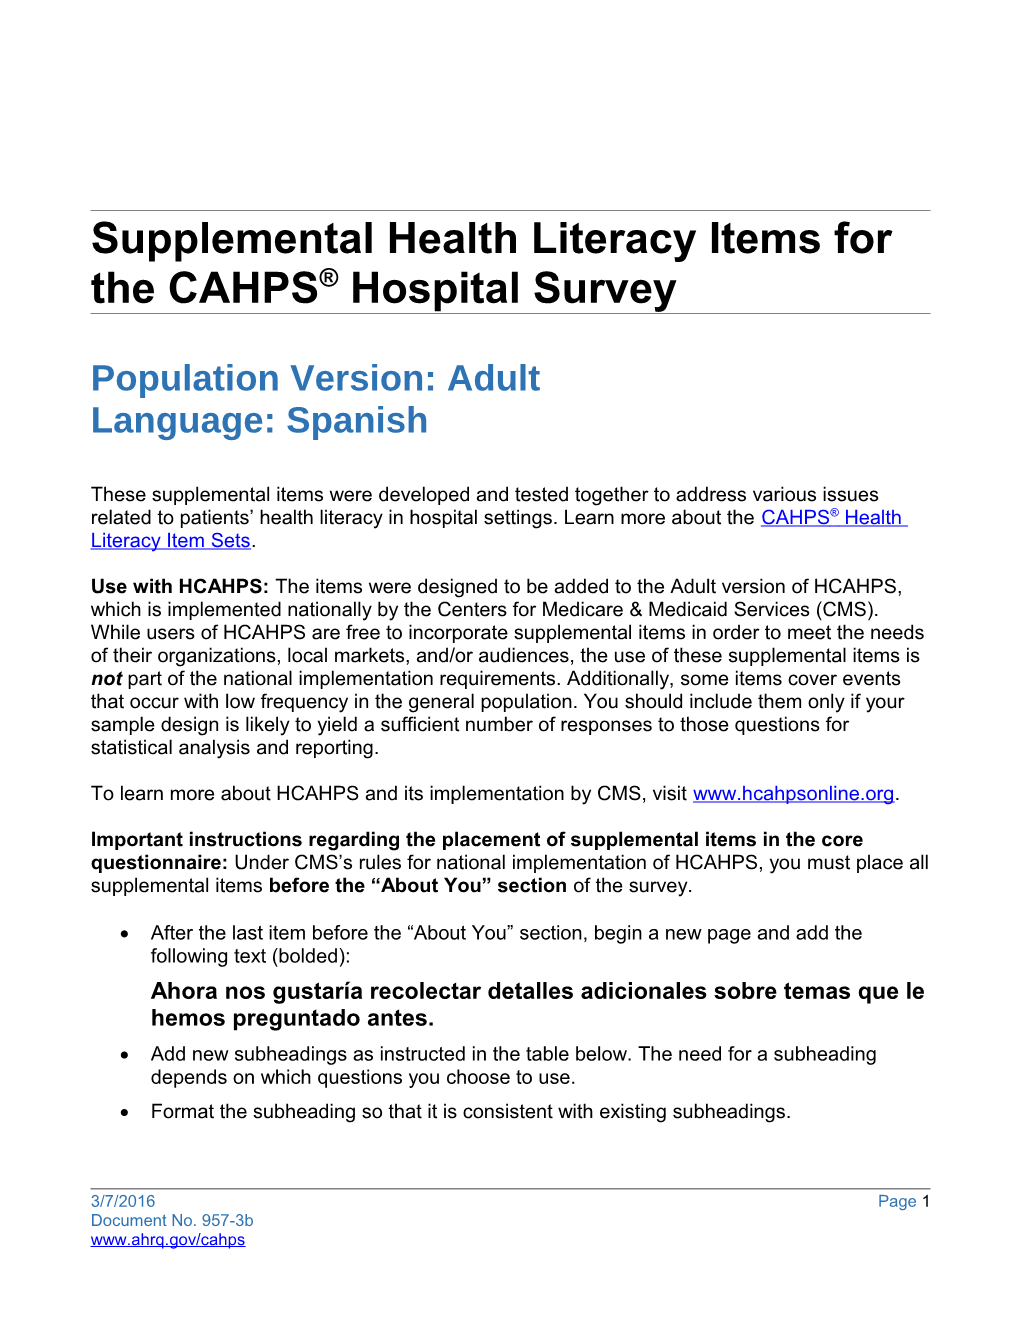 CAHPS Hospital Surveysupplemental Items: Health Literacy